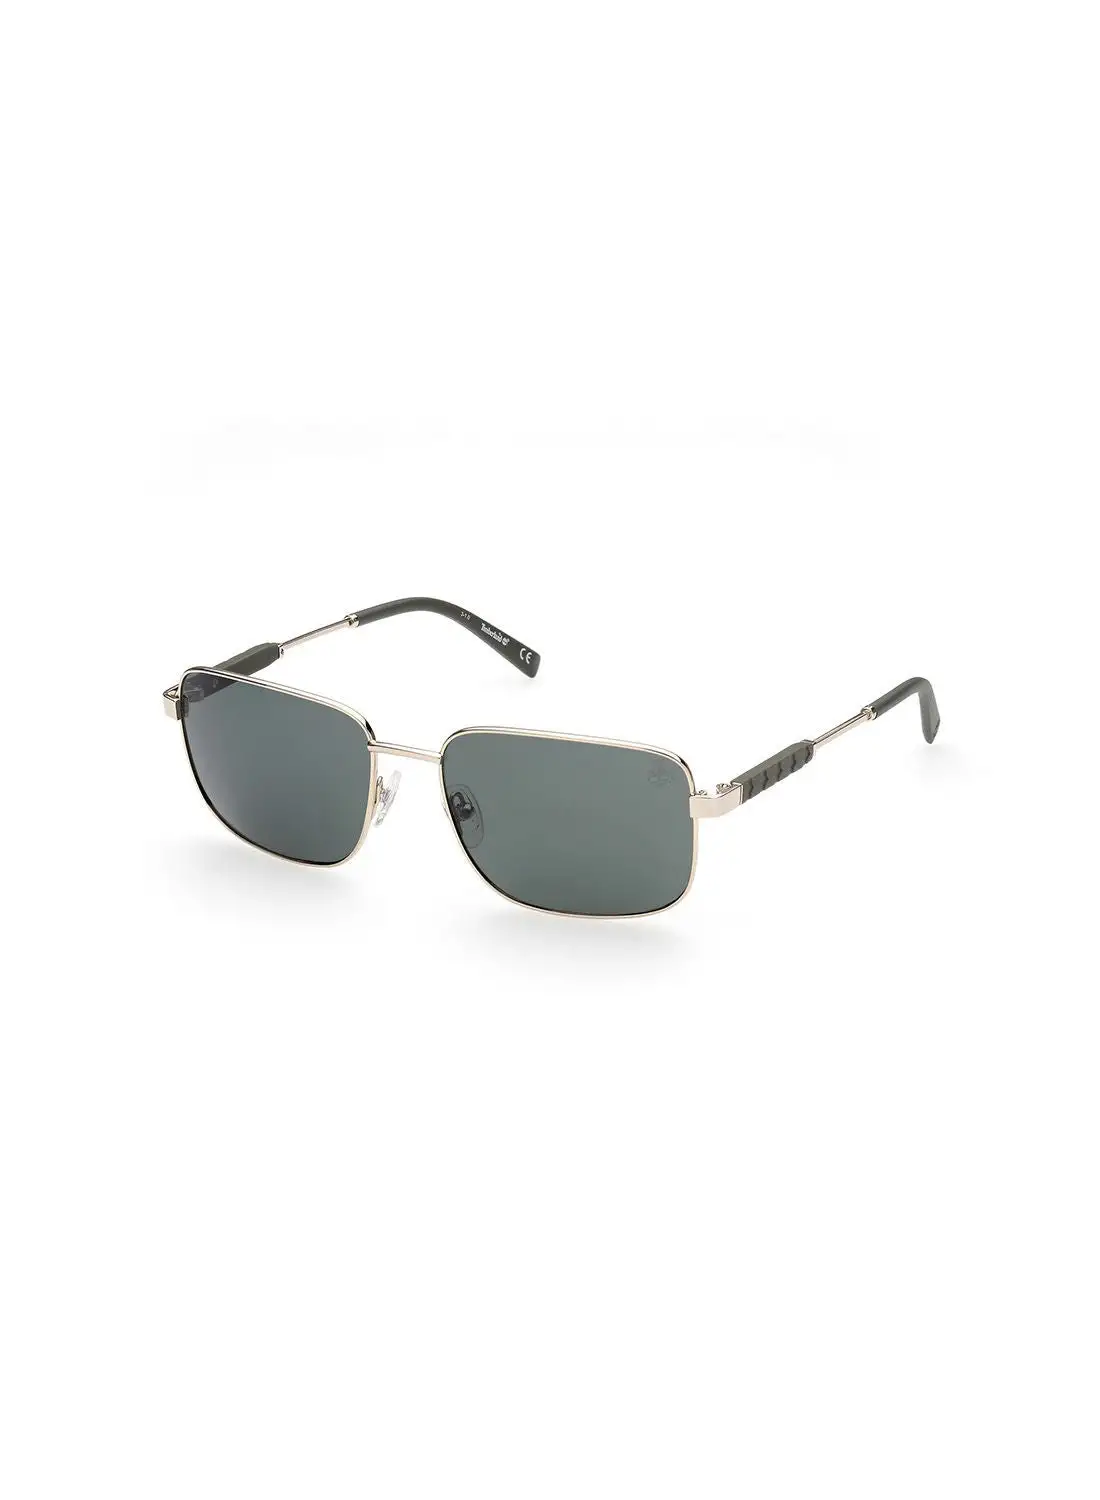 Timberland Men's Polarized Rectangular Sunglasses - TB924132R58 - Lens Size: 58 Mm